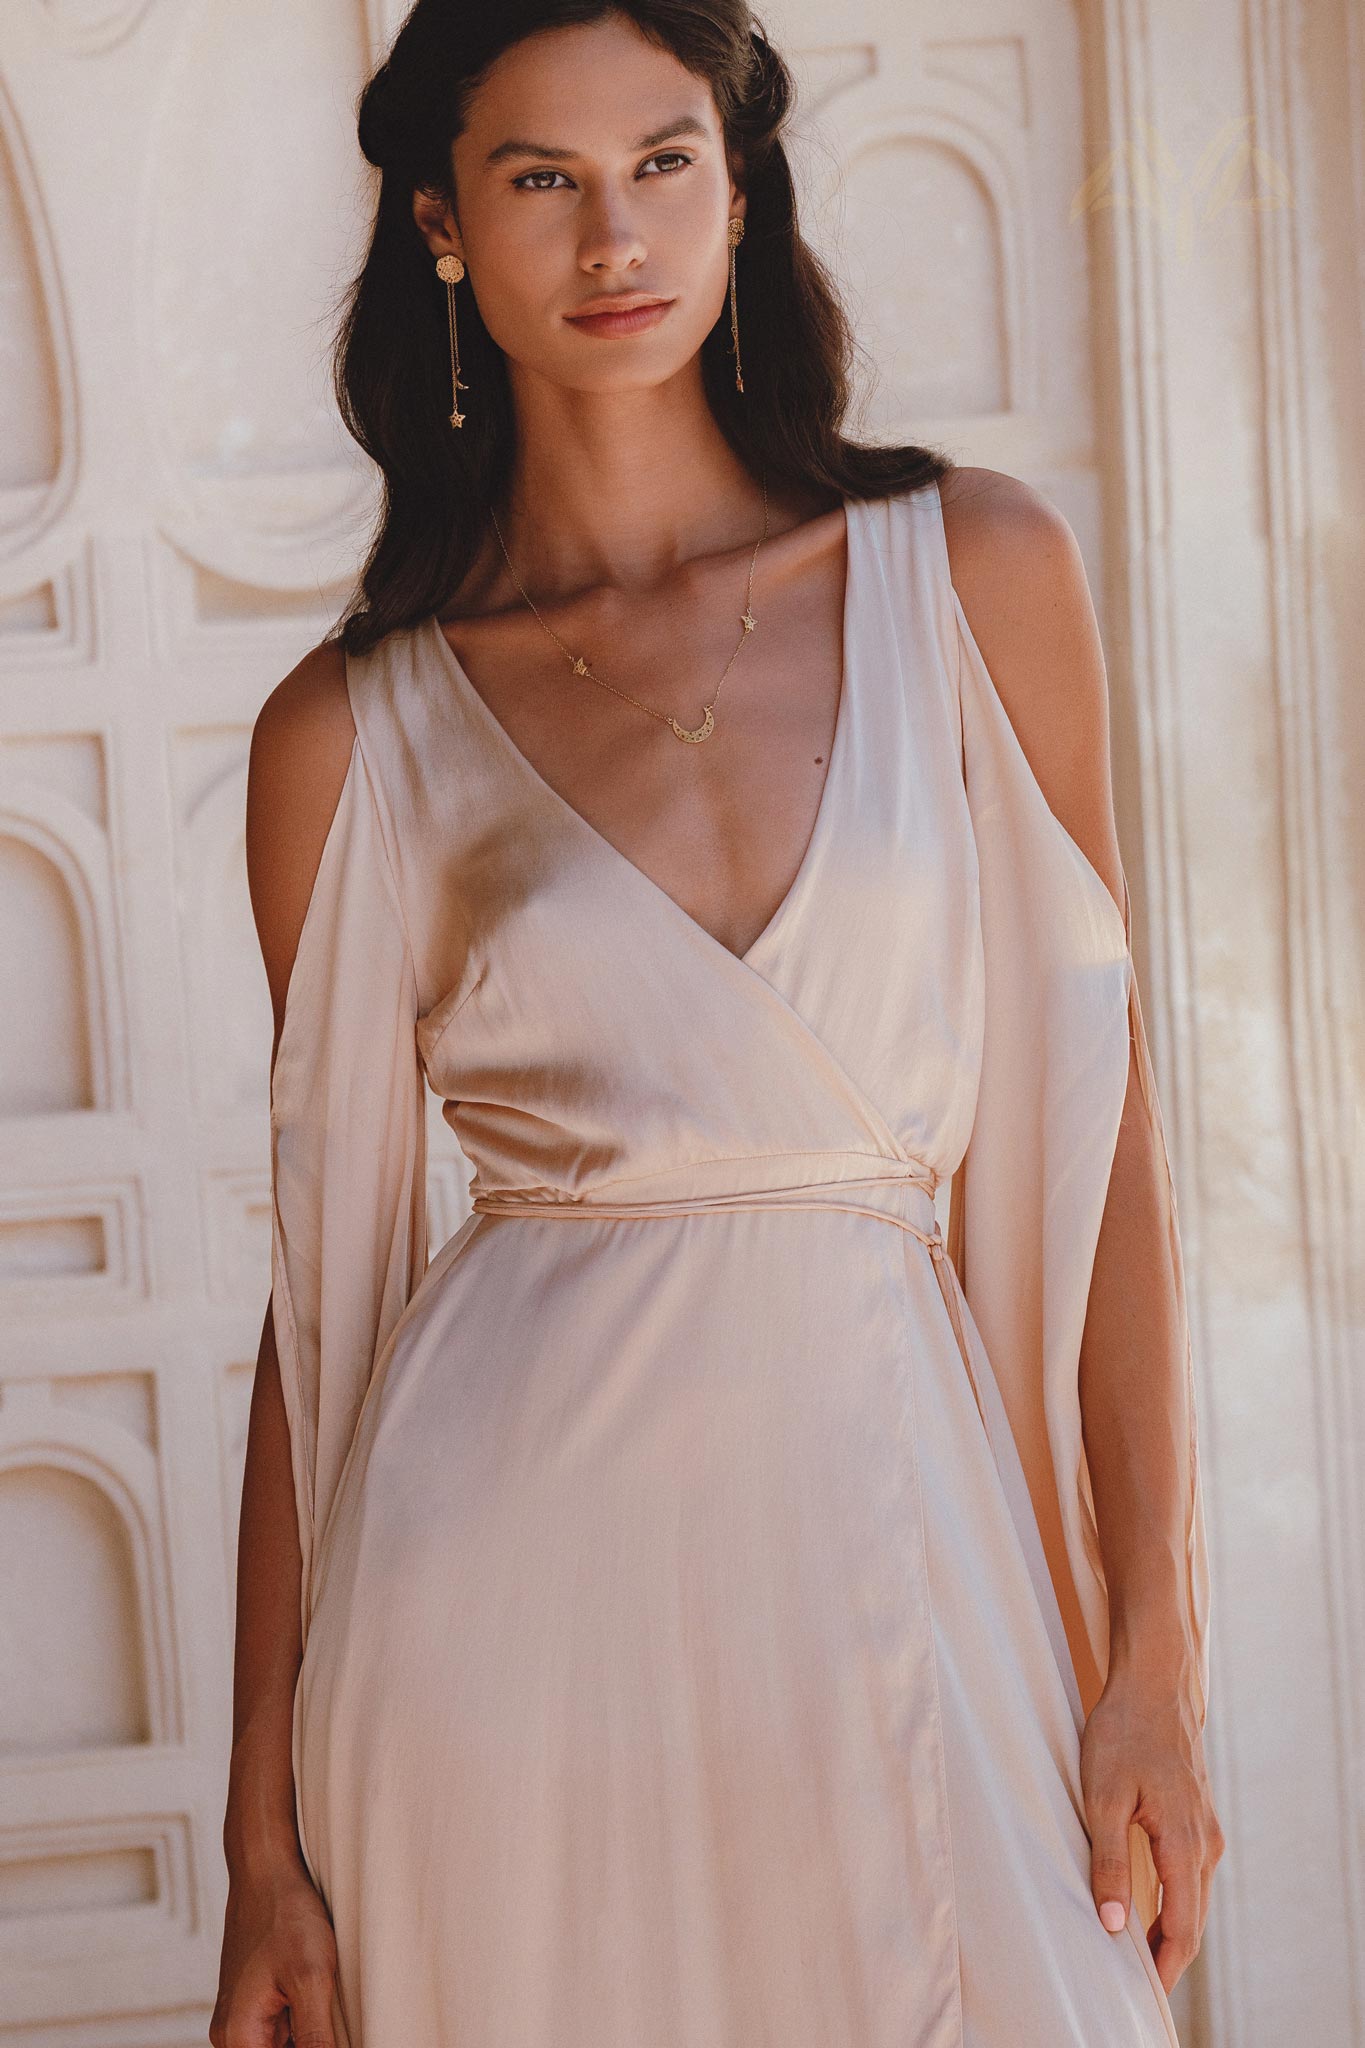 Dusty Pink and Cream Goddess Dress: Ahimsa Silk, Boho Elegant Style, Perfect for Wedding Guests or Bridesmaids.